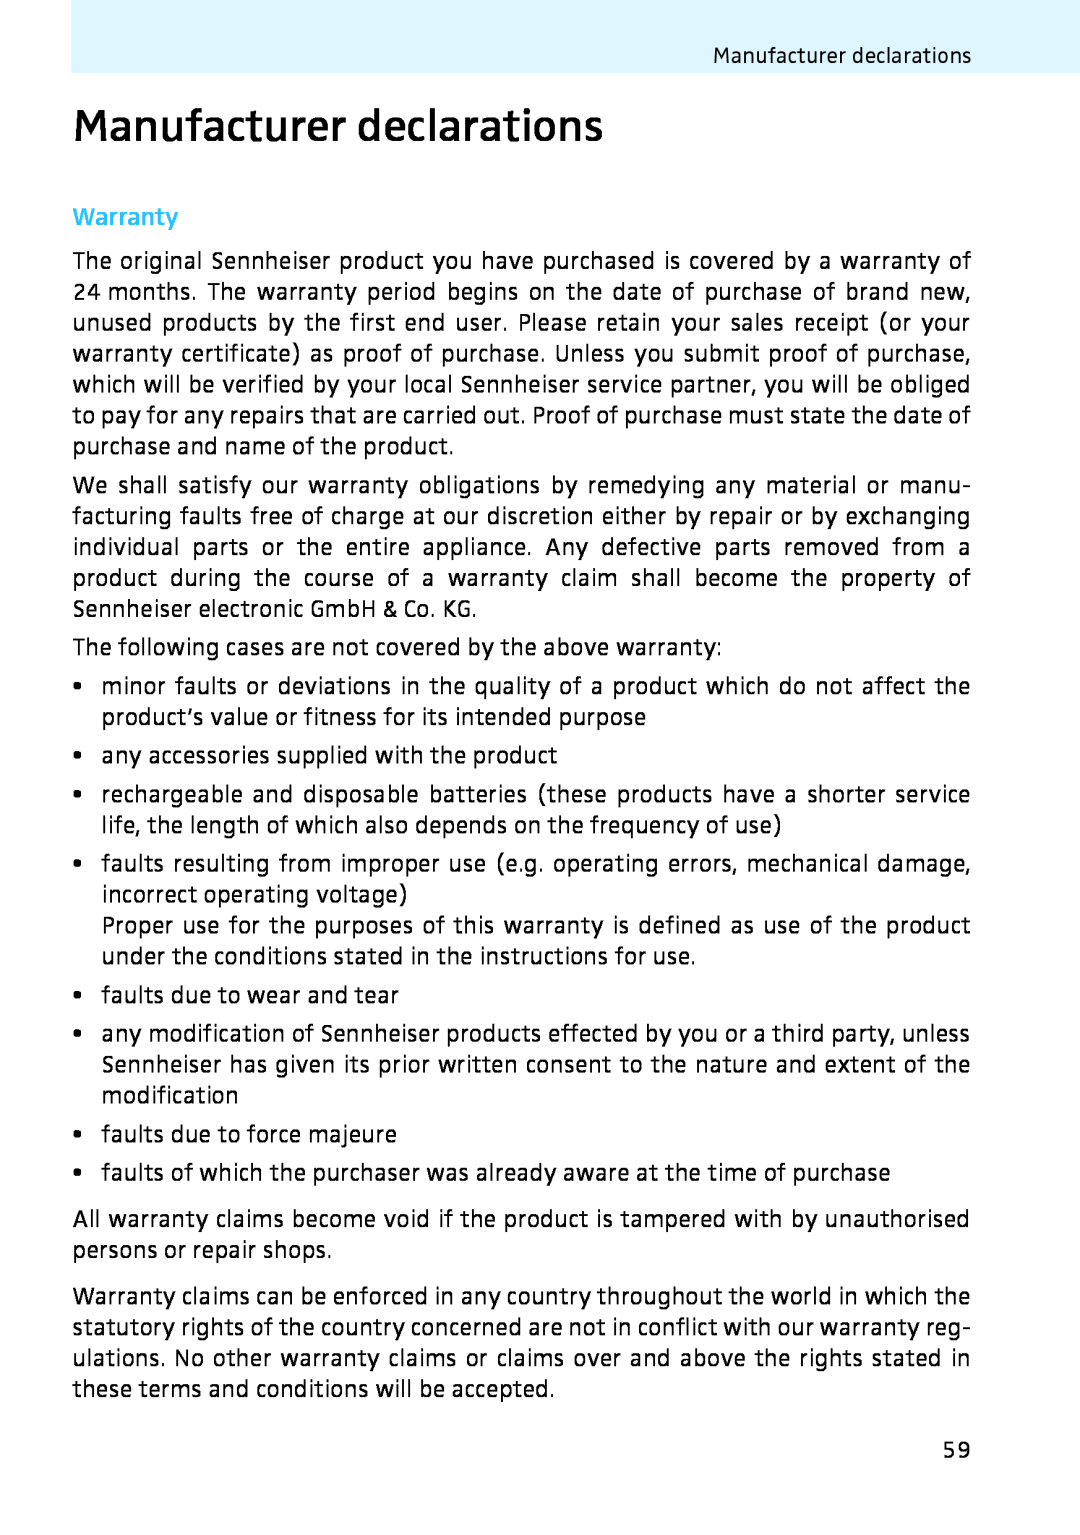 Sennheiser 2020 instruction manual Manufacturer declarations, Warranty 